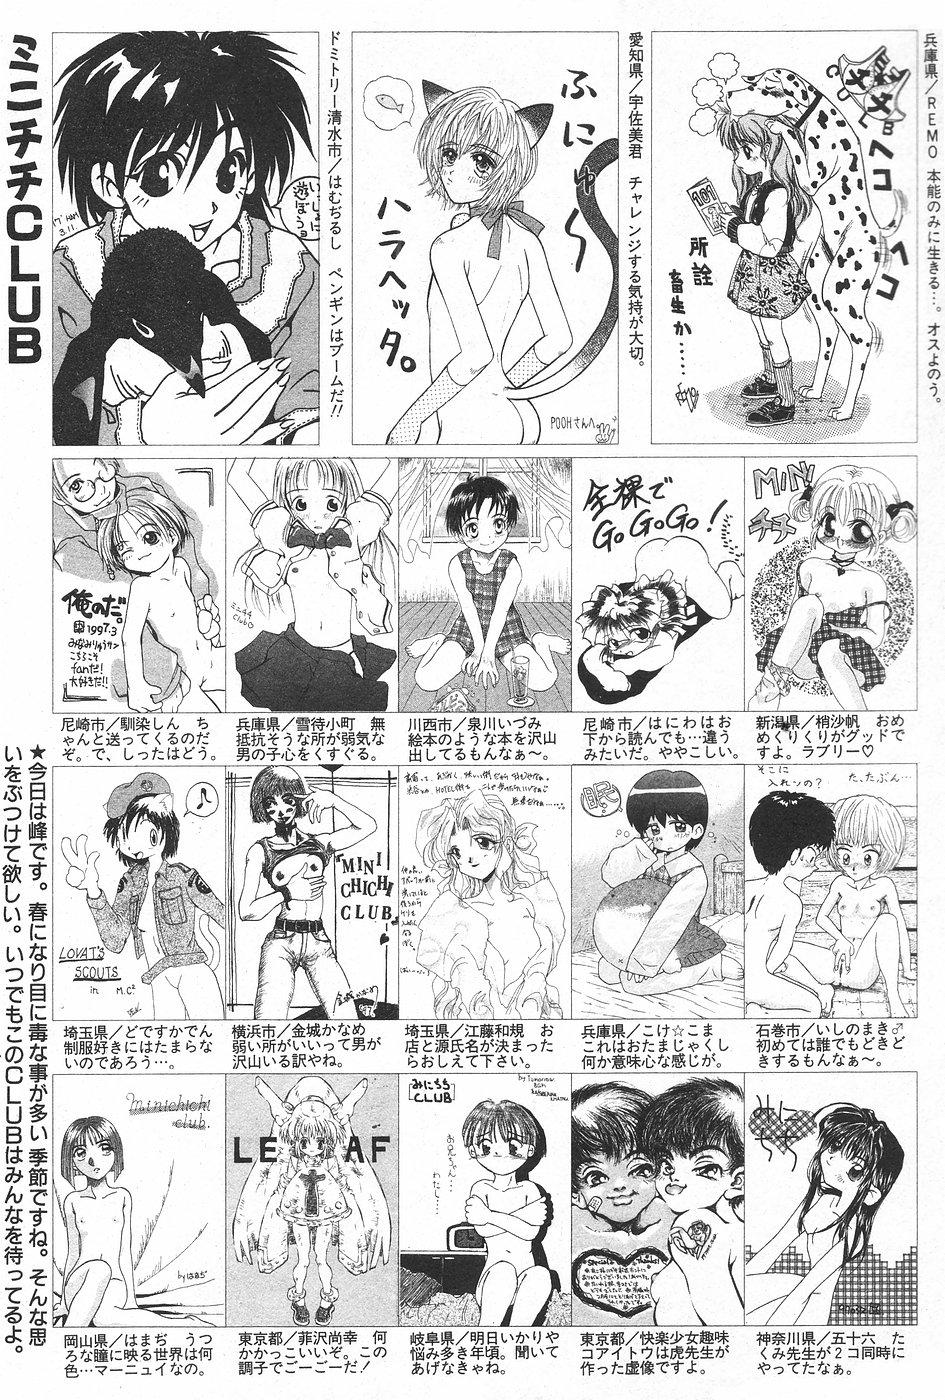 Manga Hotmilk 1997-05 178